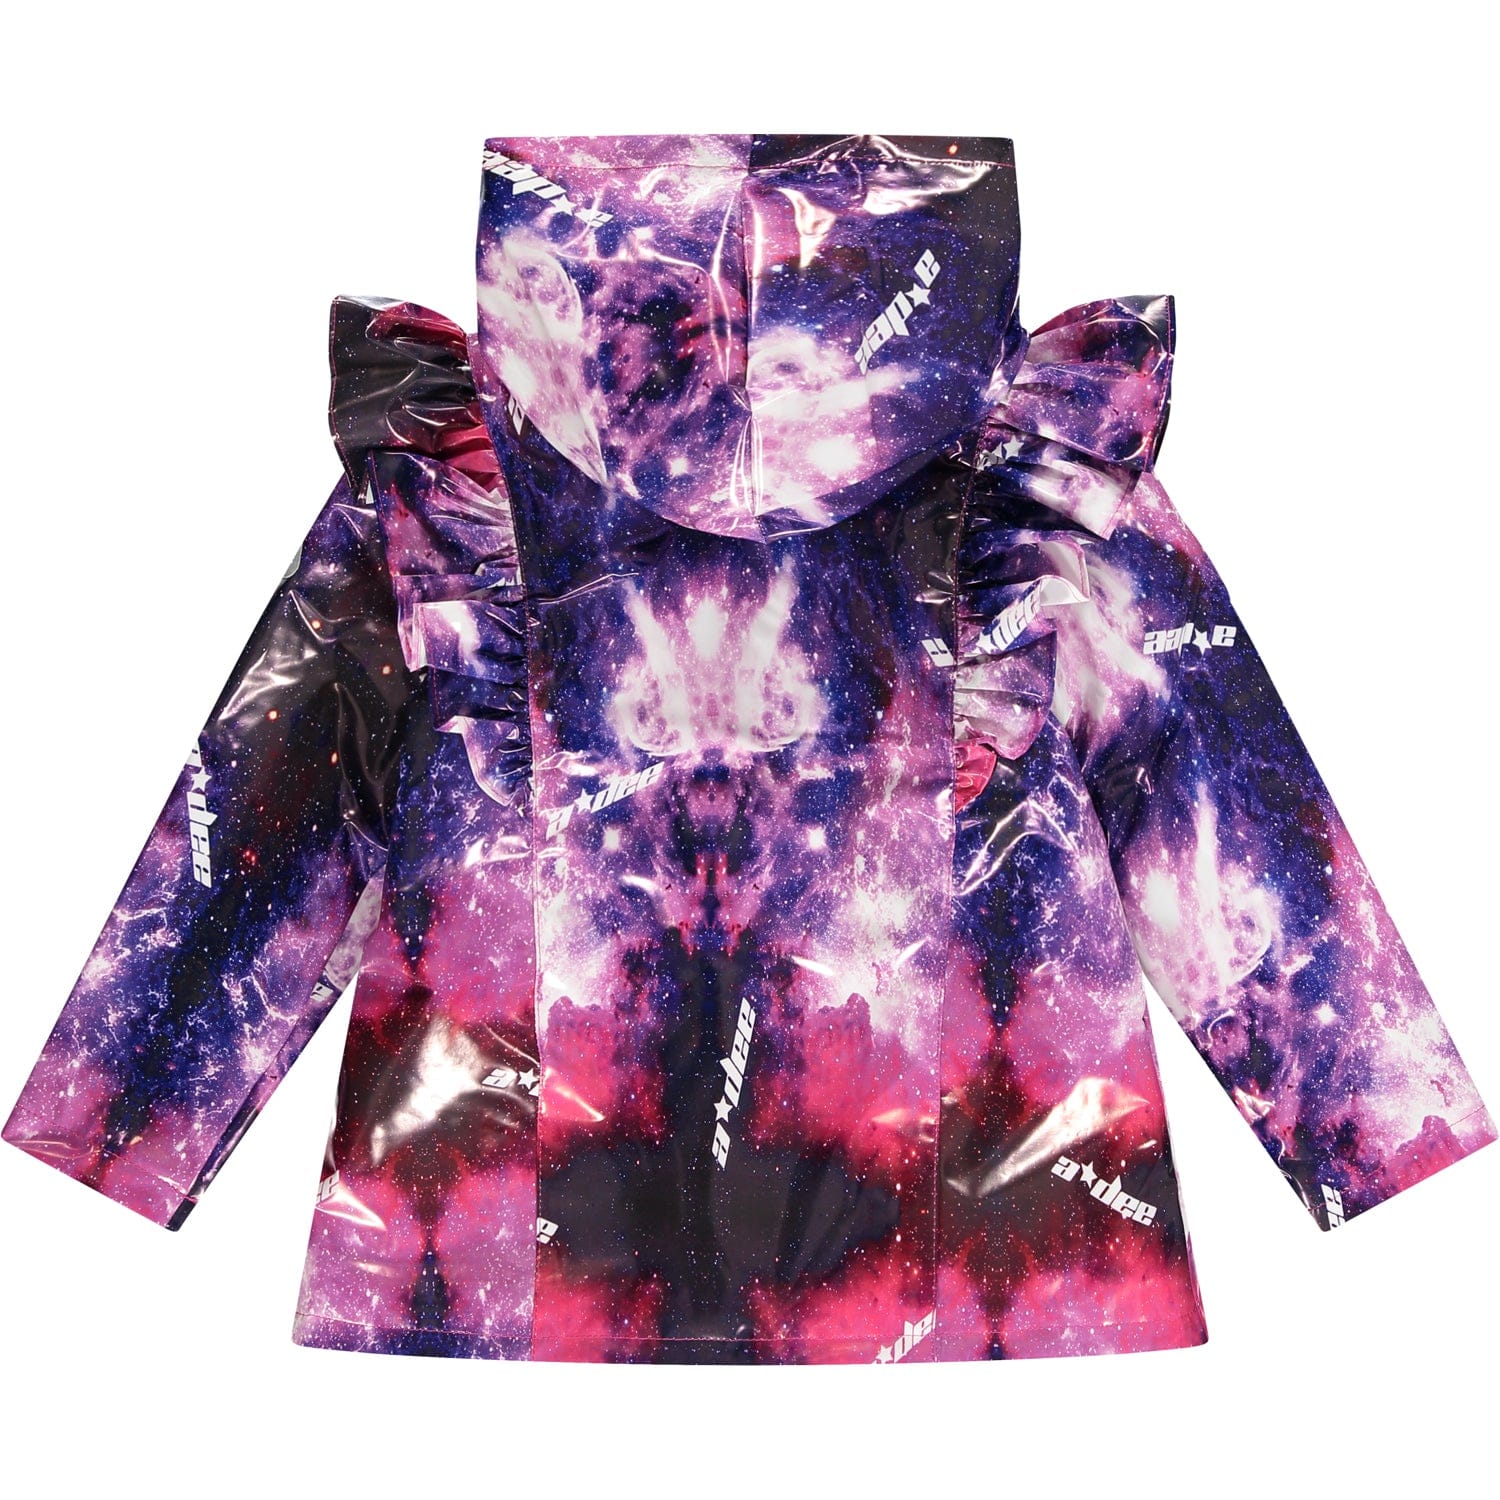 A DEE - Stella Galaxy Frill Raincoat - Pink Glaze